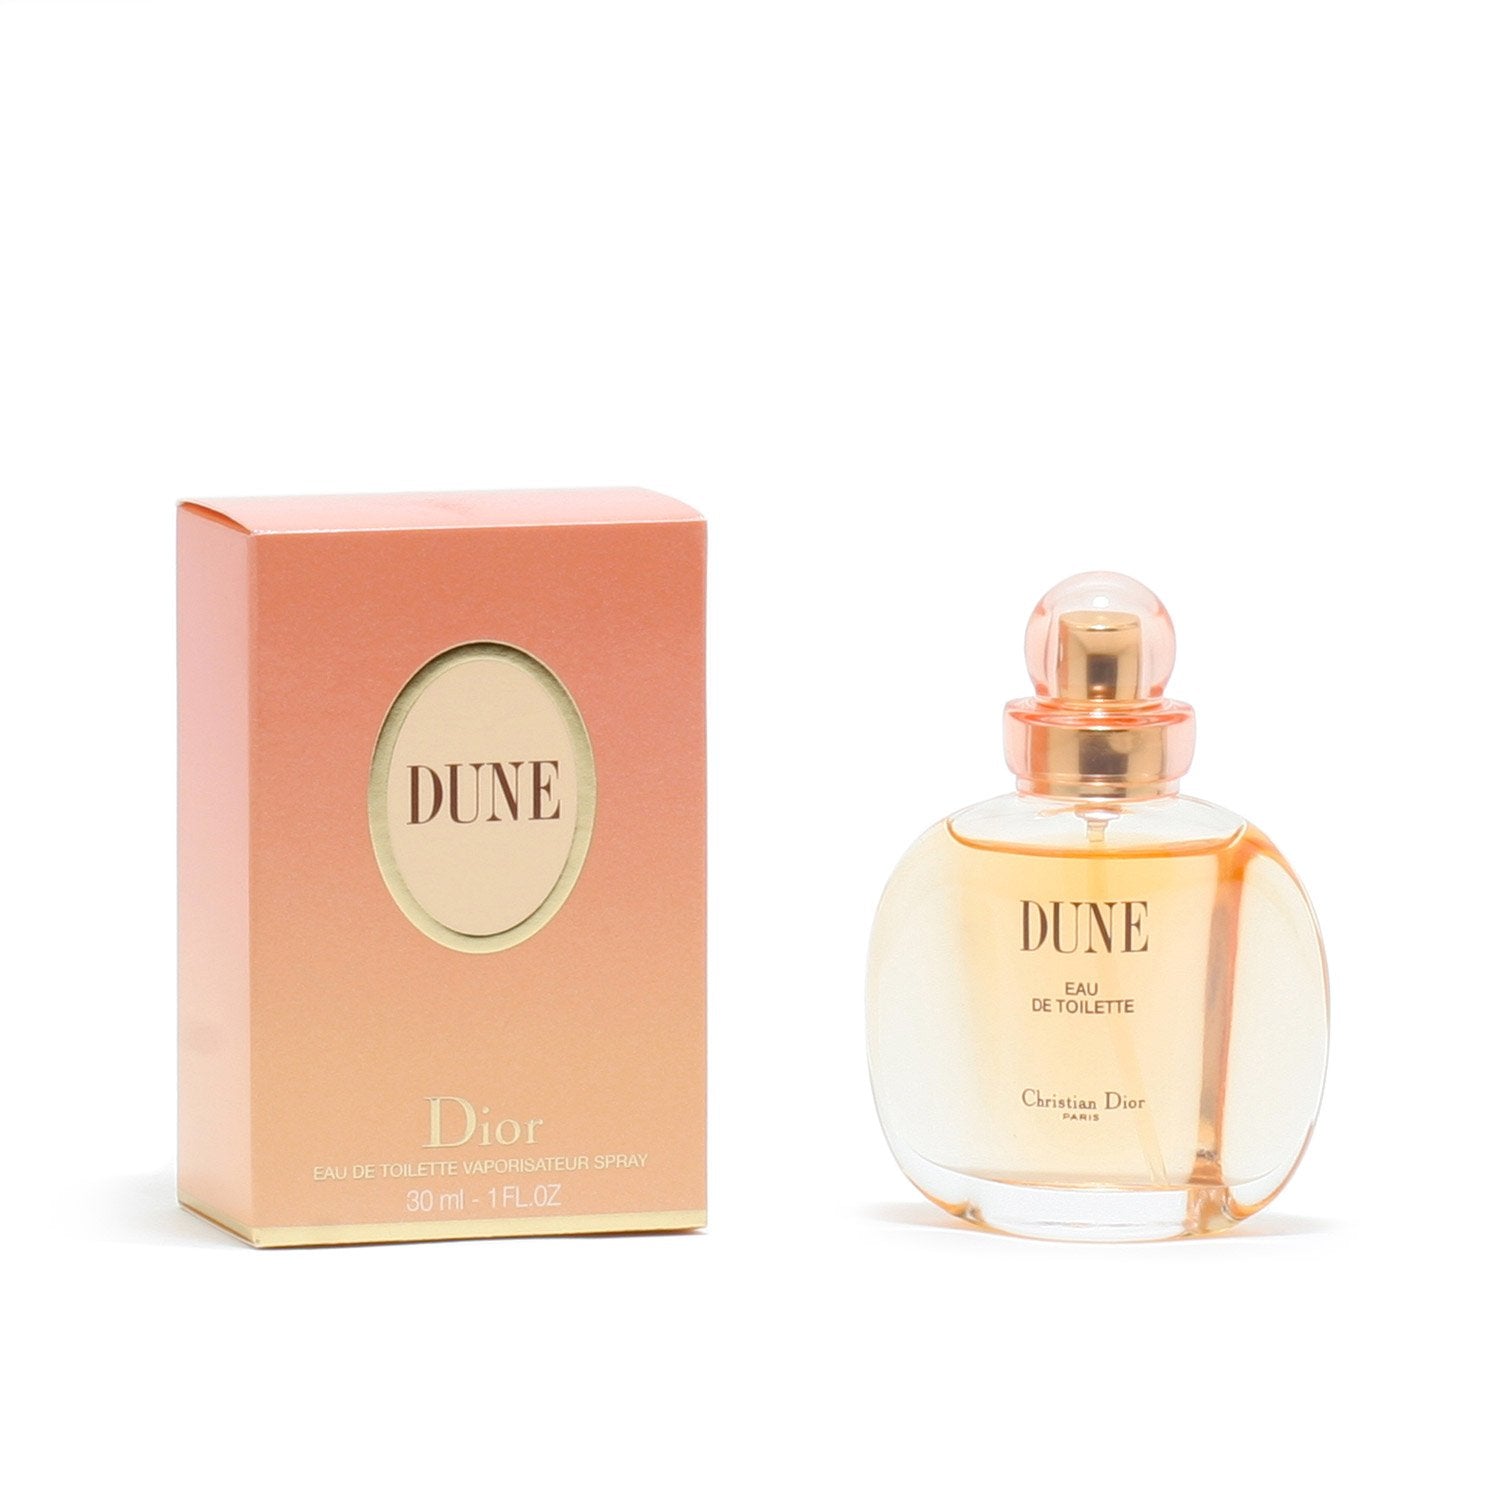 Perfume - DUNE FOR WOMEN BY CHRISTIAN DIOR - EAU DE TOILETTE SPRAY